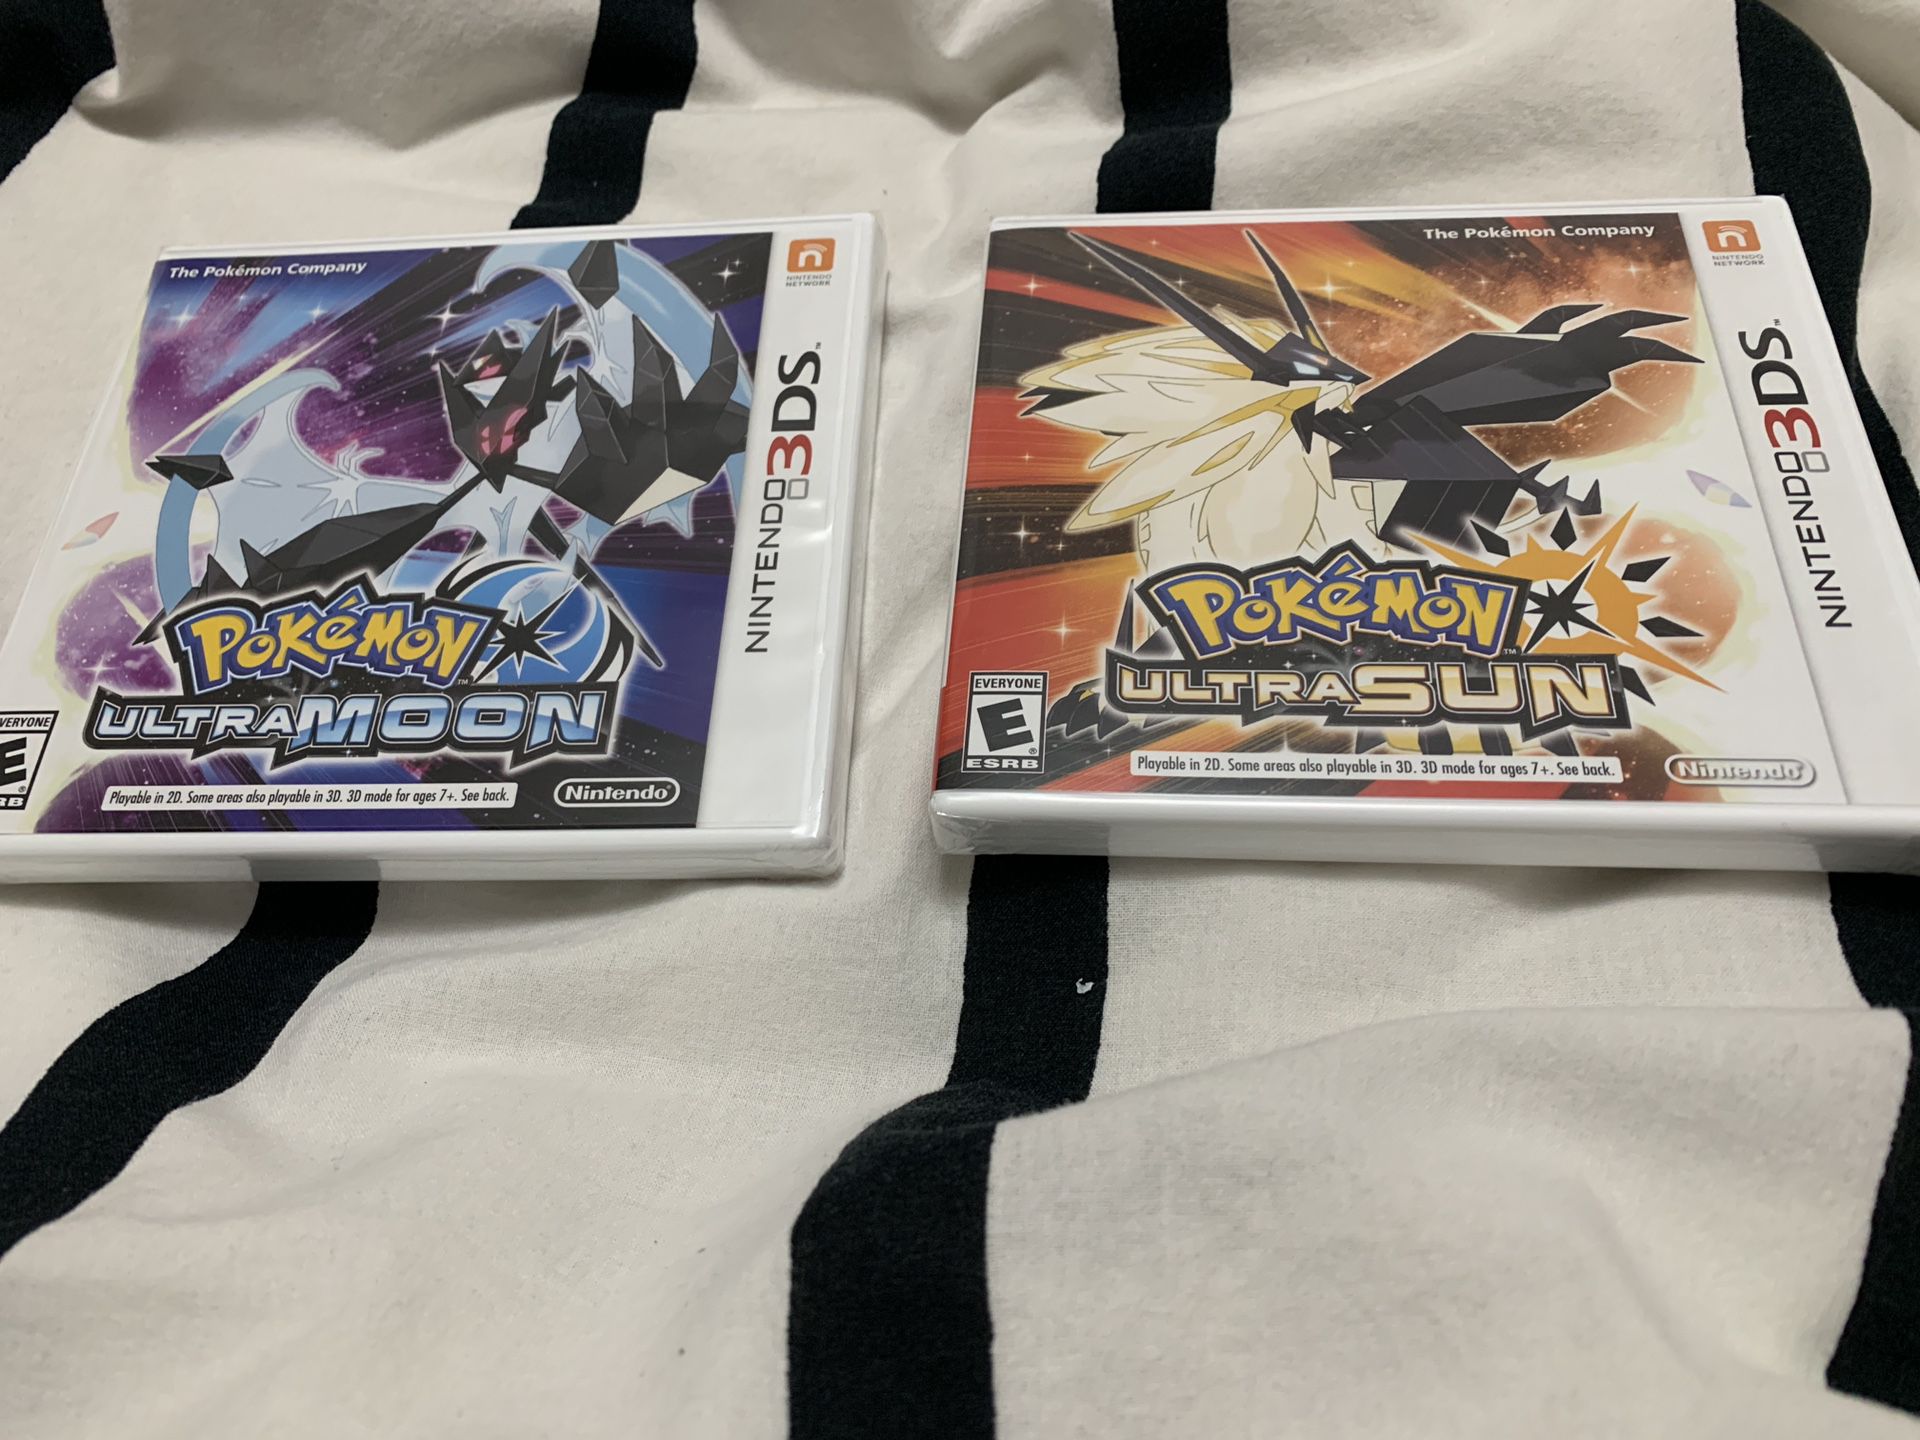 Brand new Pokémon ultra sun and moon.